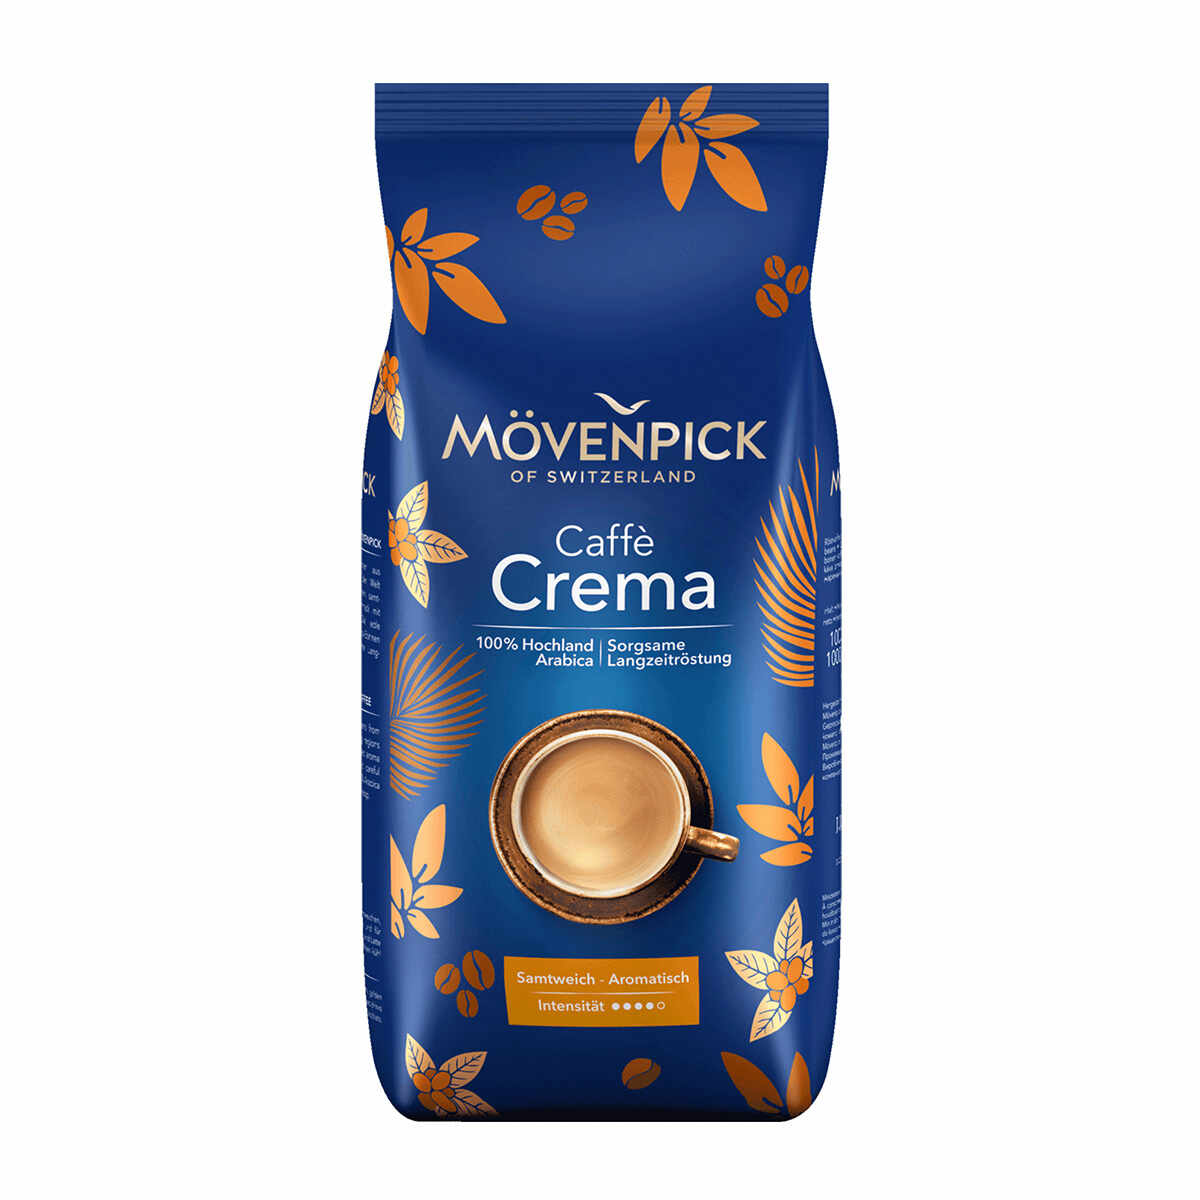 Movenpick Caffe Crema cafea boabe 1 kg